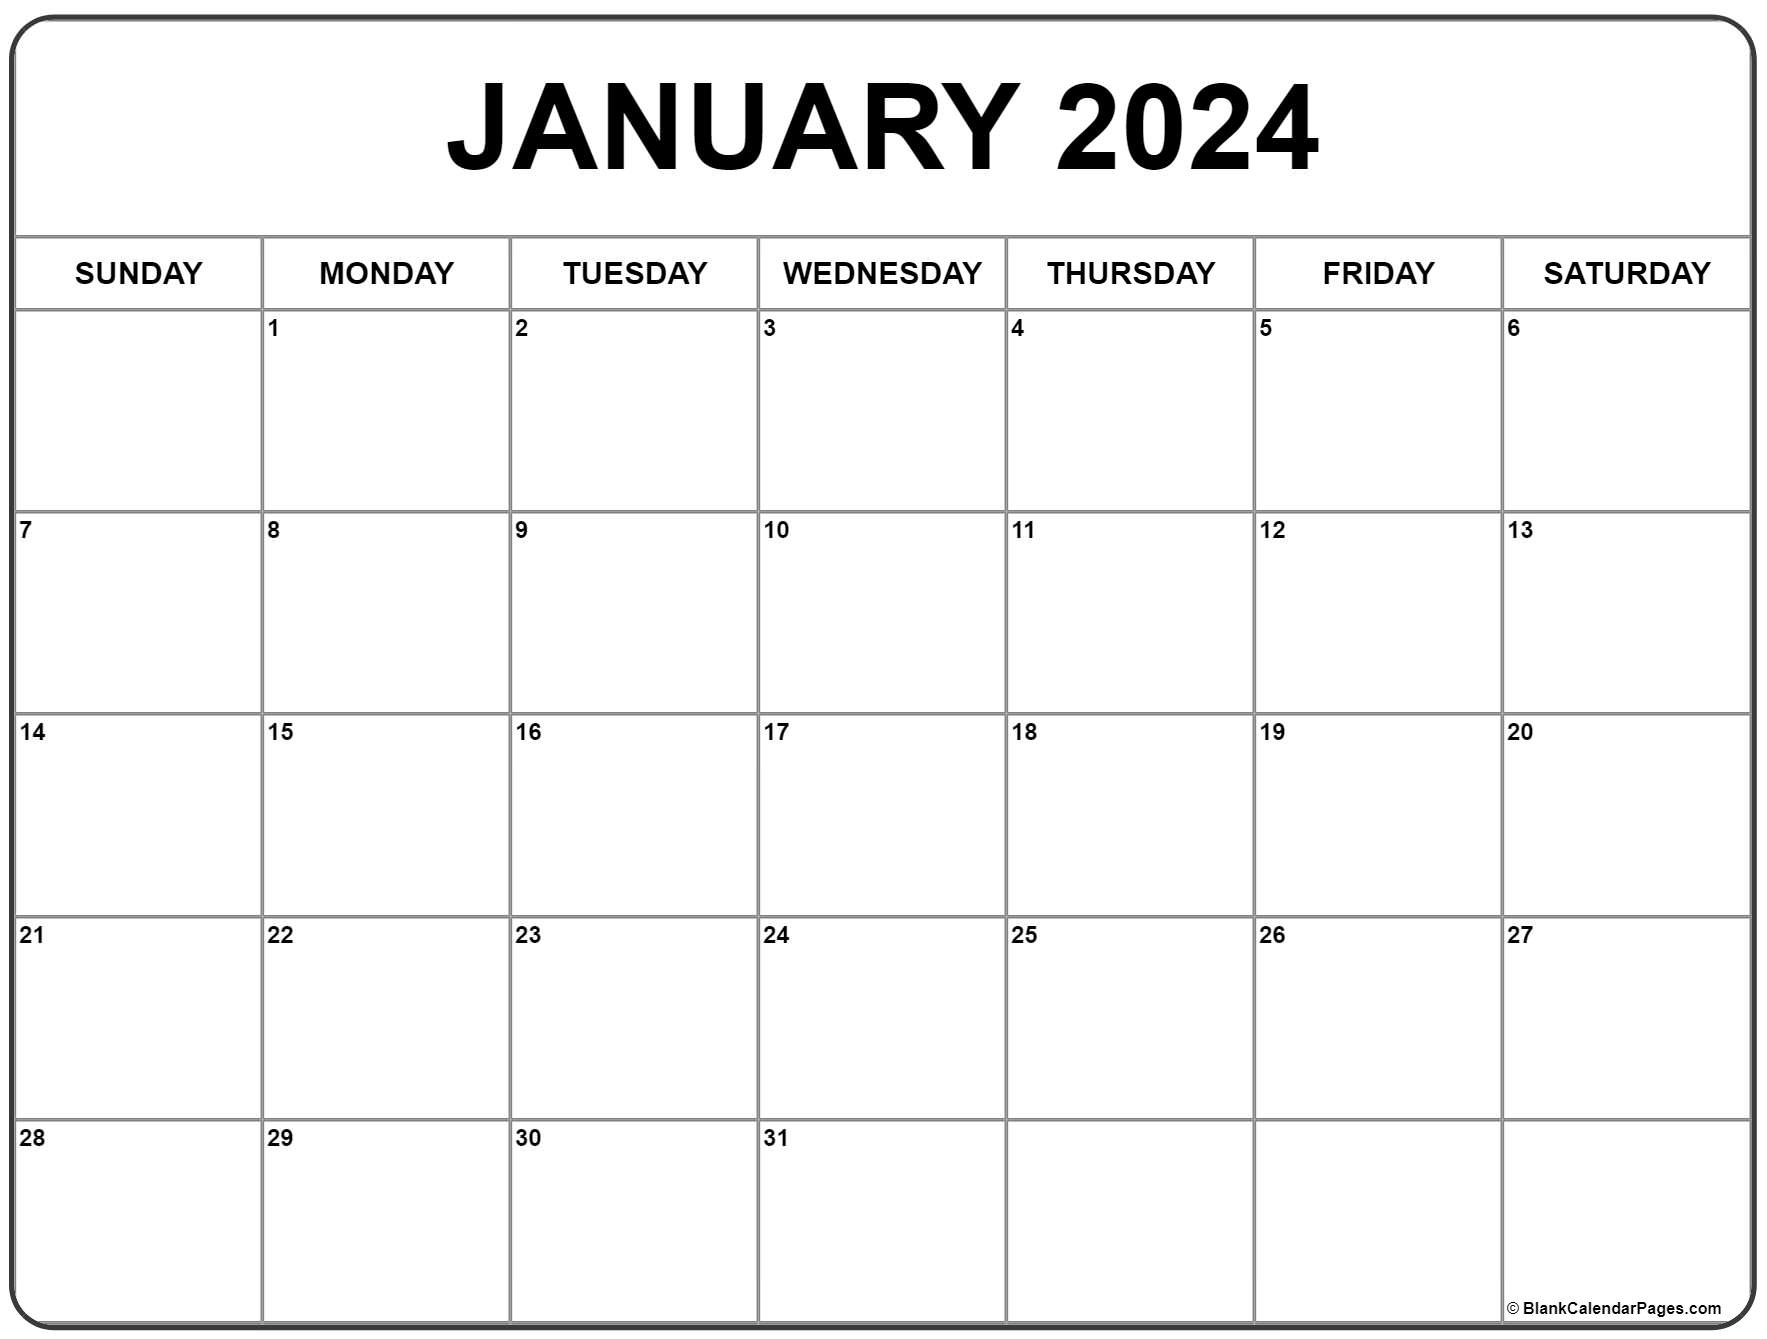 January 2024 Calendar | Free Printable Calendar for Calendar January 2024 Free Printable